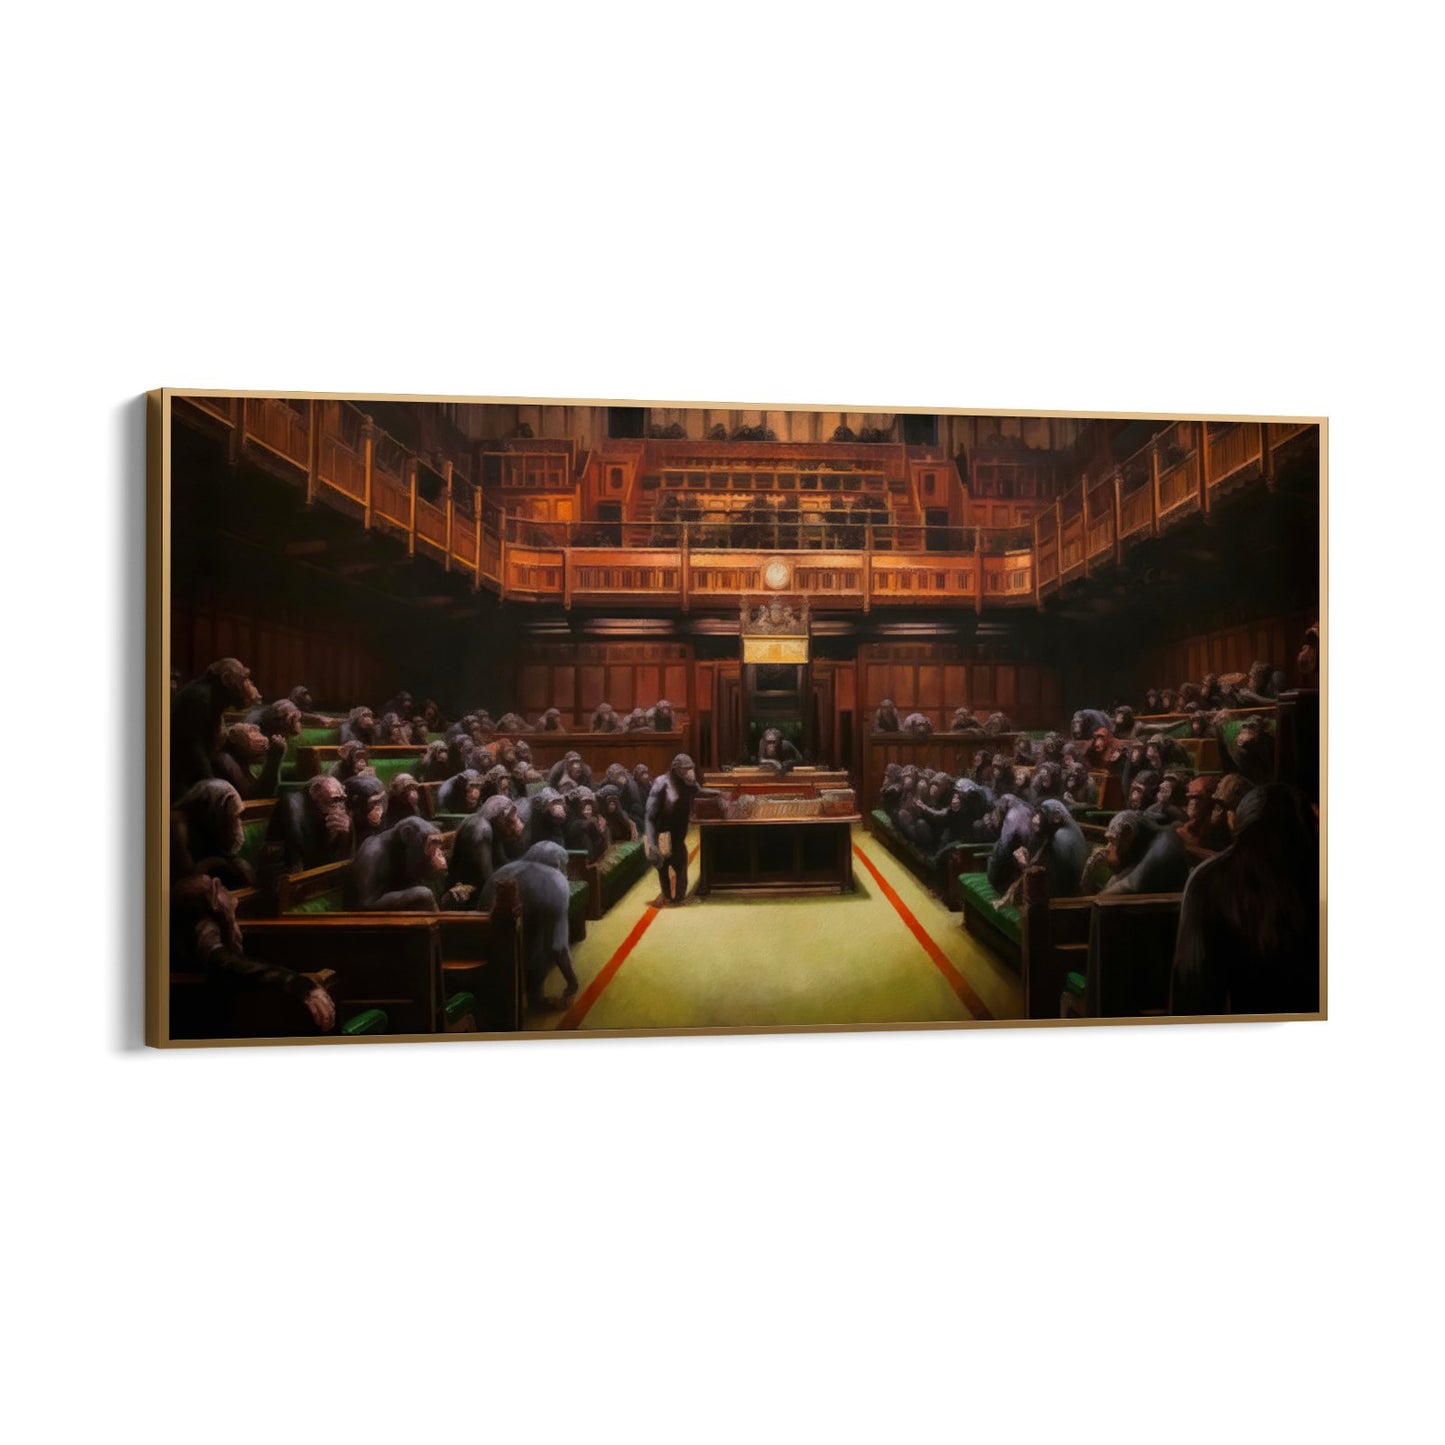 Majomparlament, Banksy